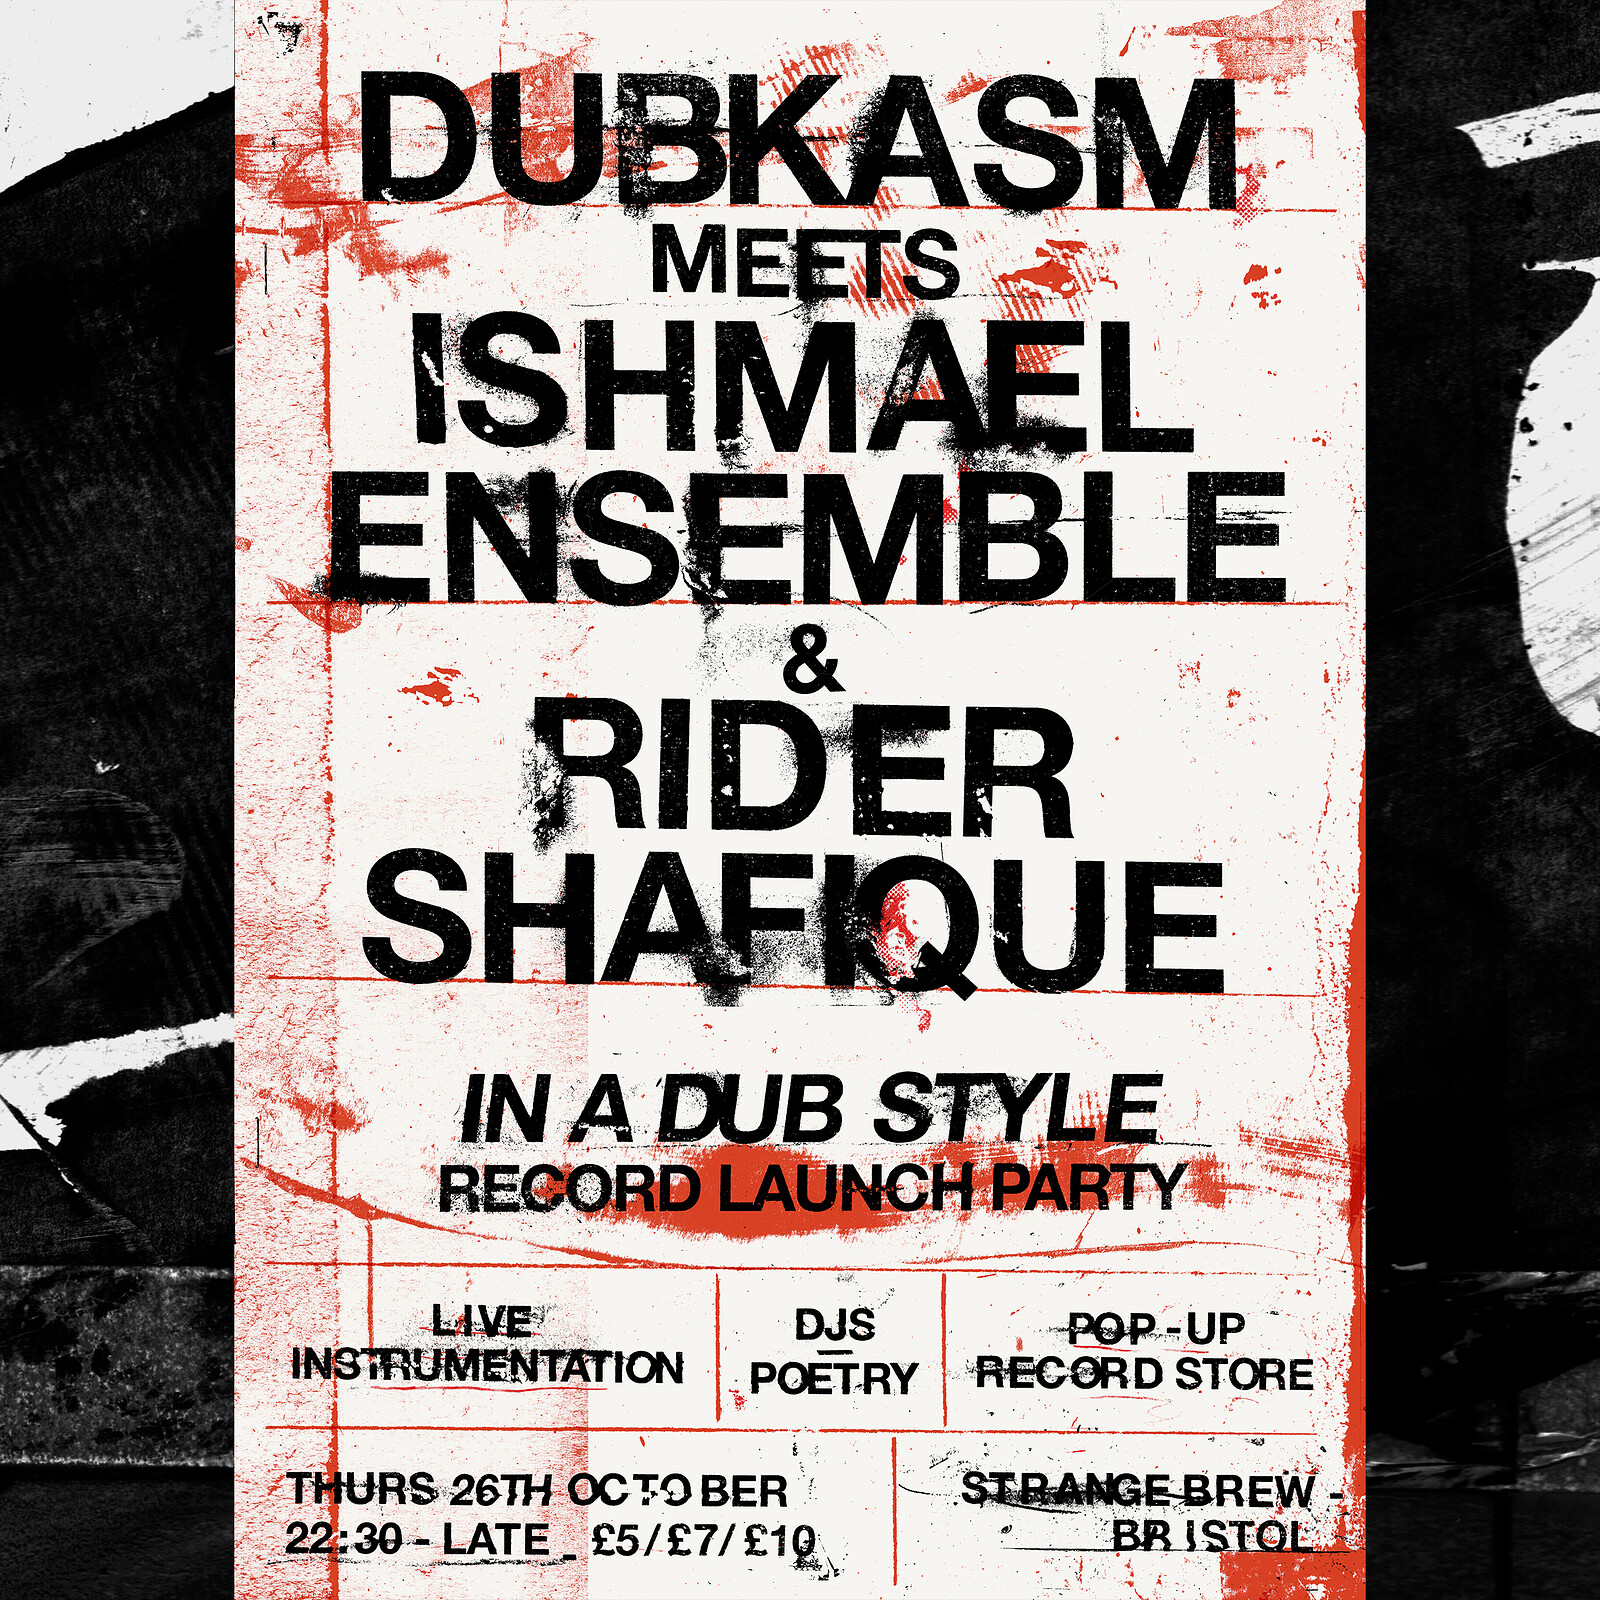 Dubkasm meets Ishmael Ensemble & Rider Shafique at Strange Brew